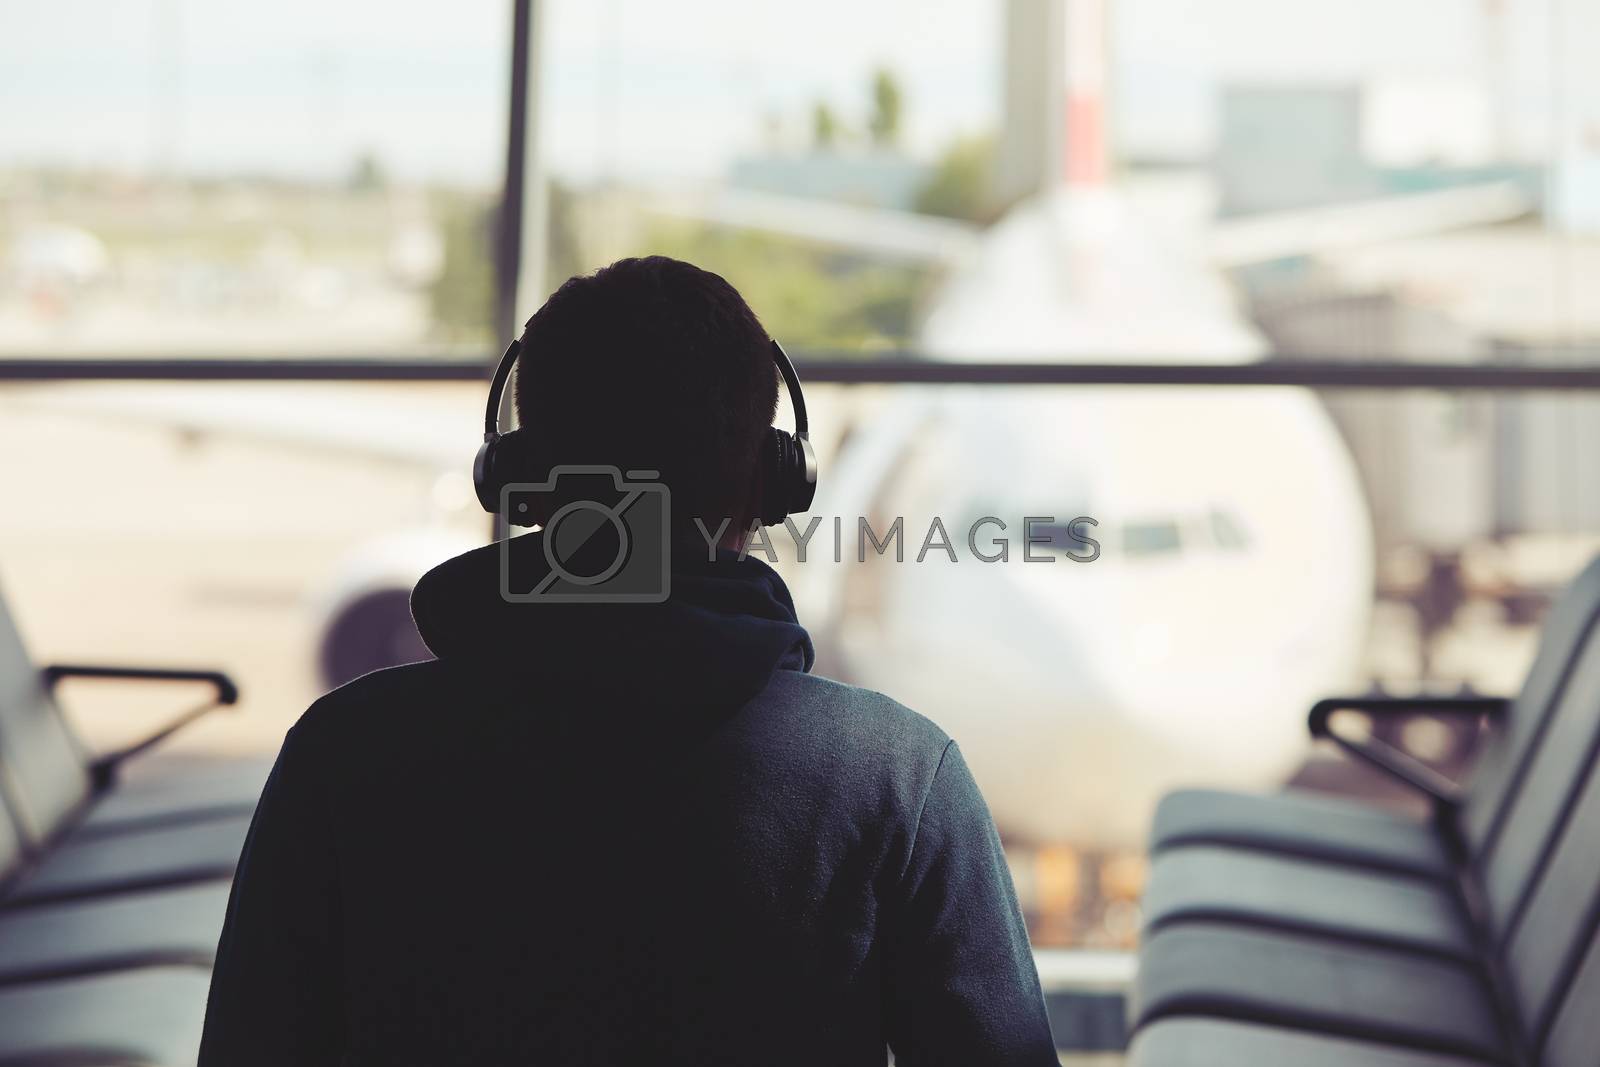 Royalty free image of Traveler at the airport by Chalabala